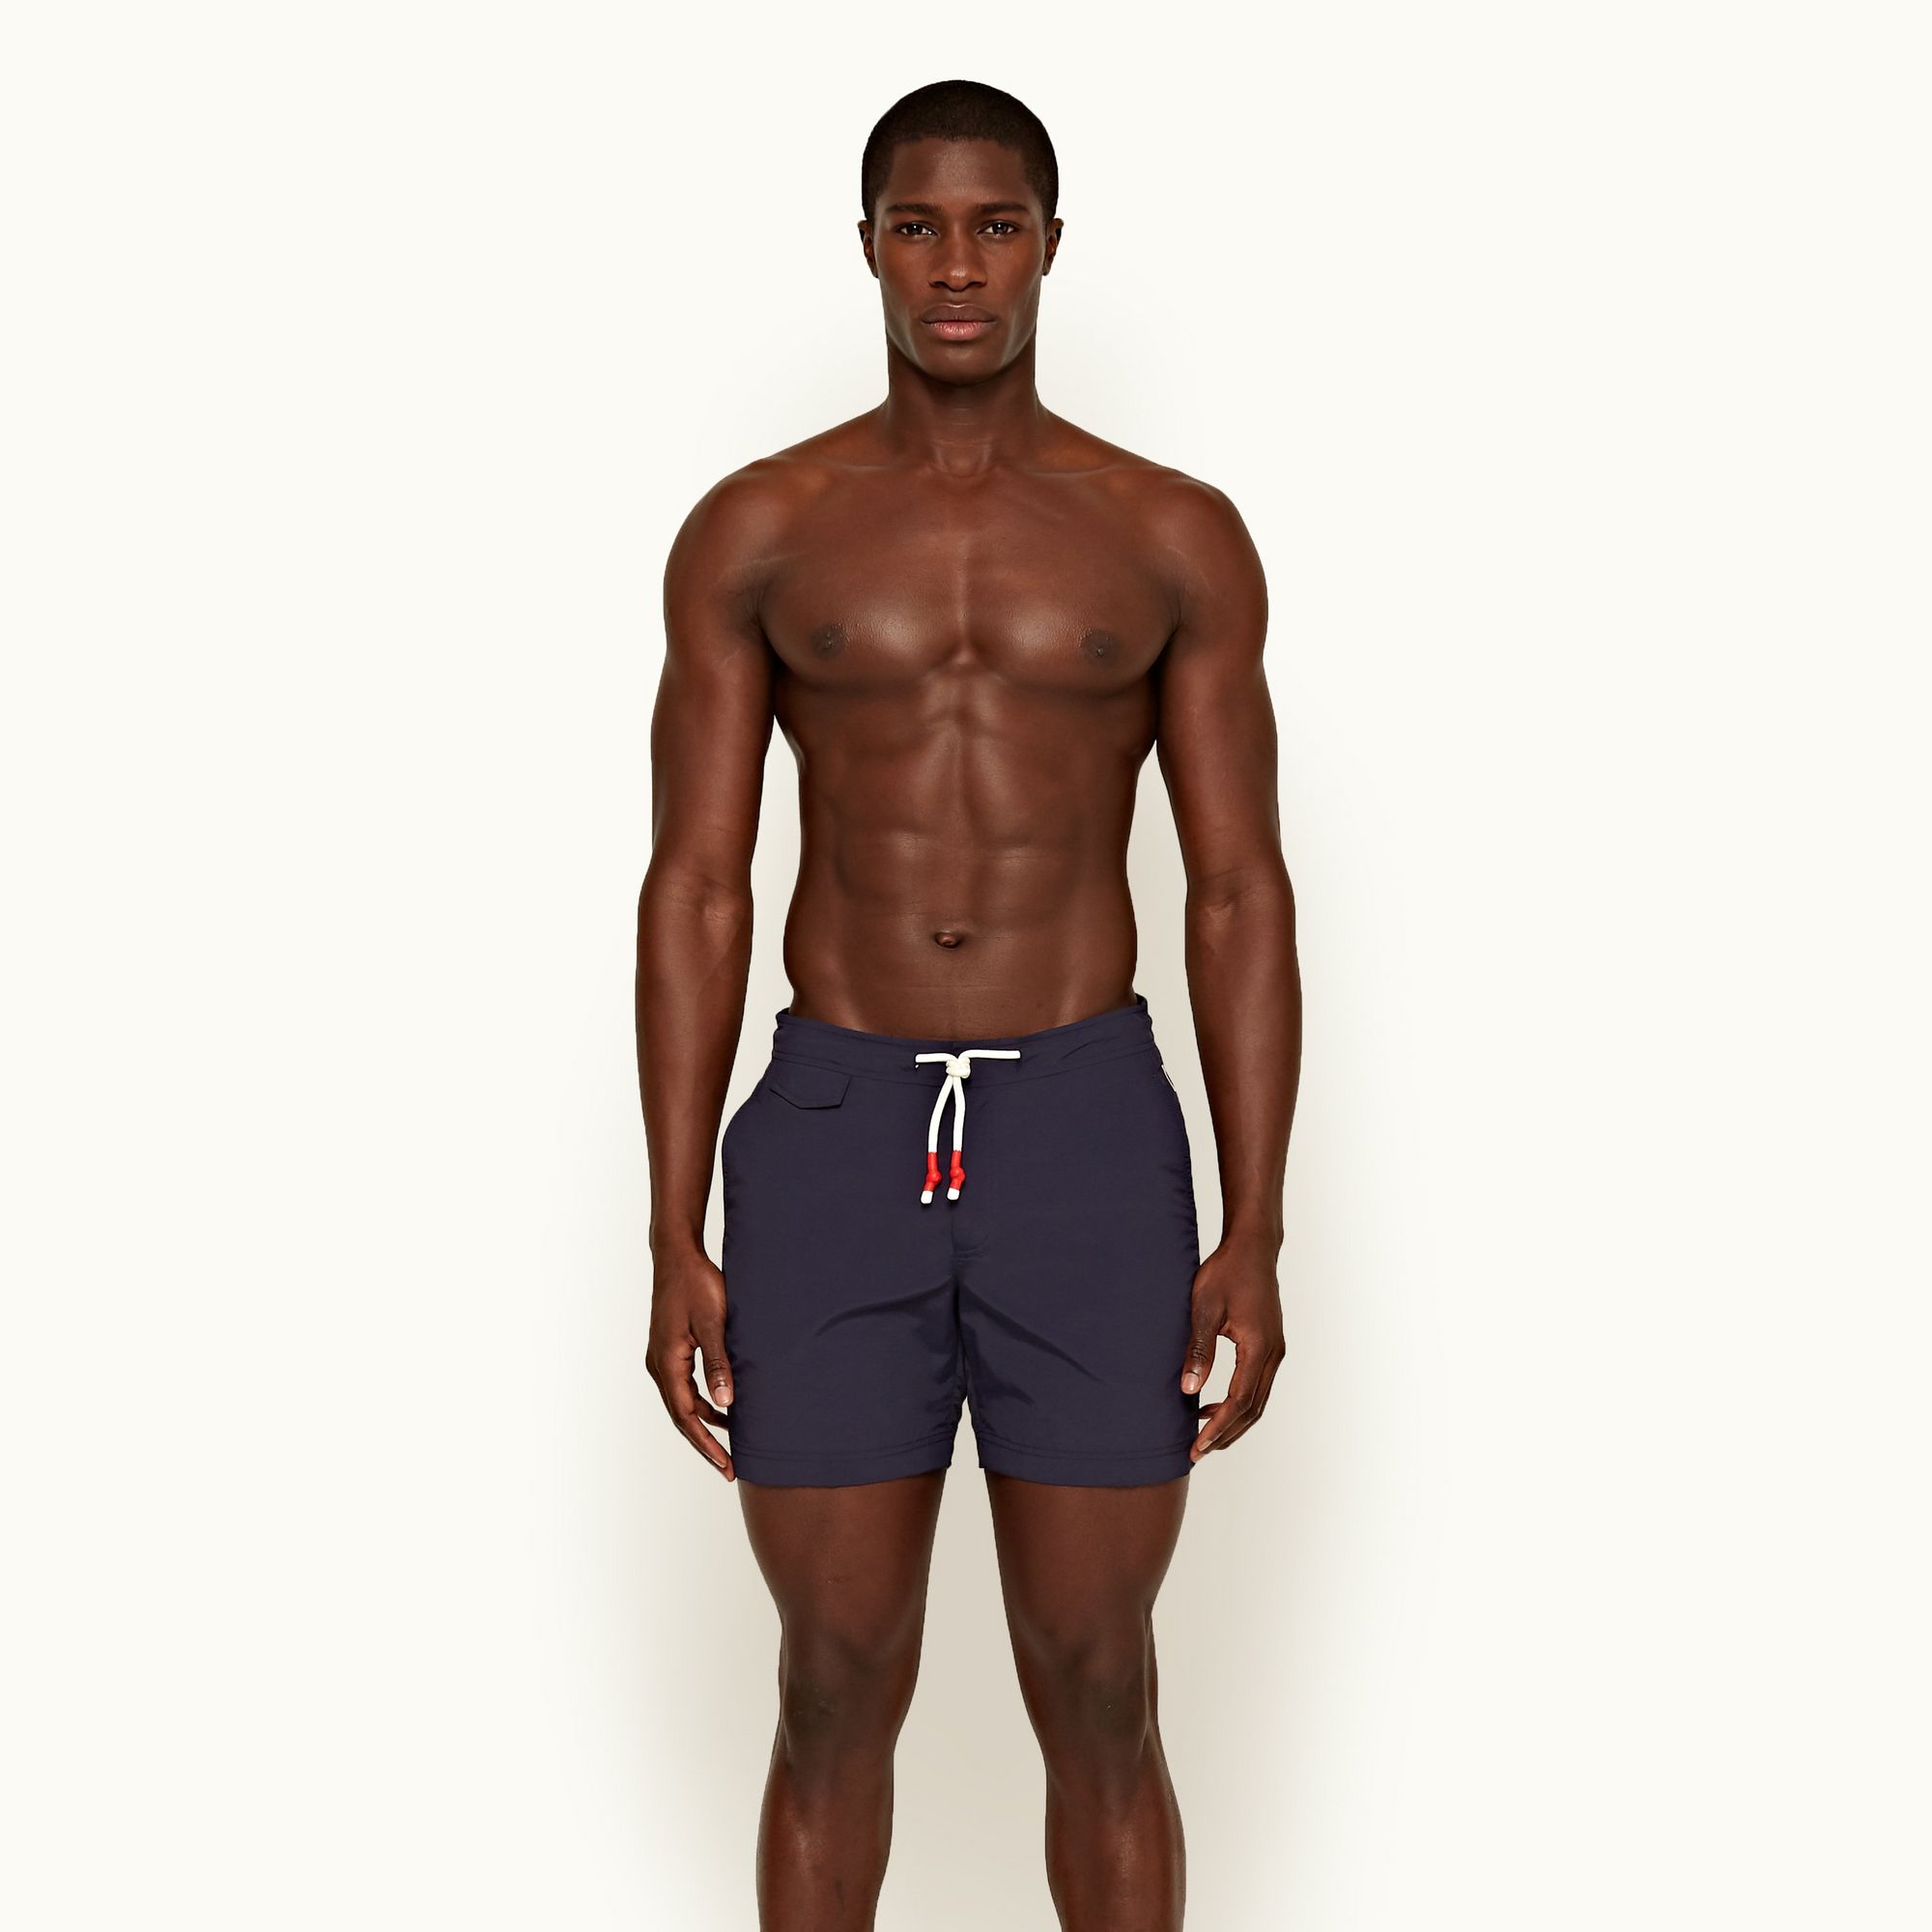 Standard - Navy Mid-Length Swim Shorts | Orlebar Brown